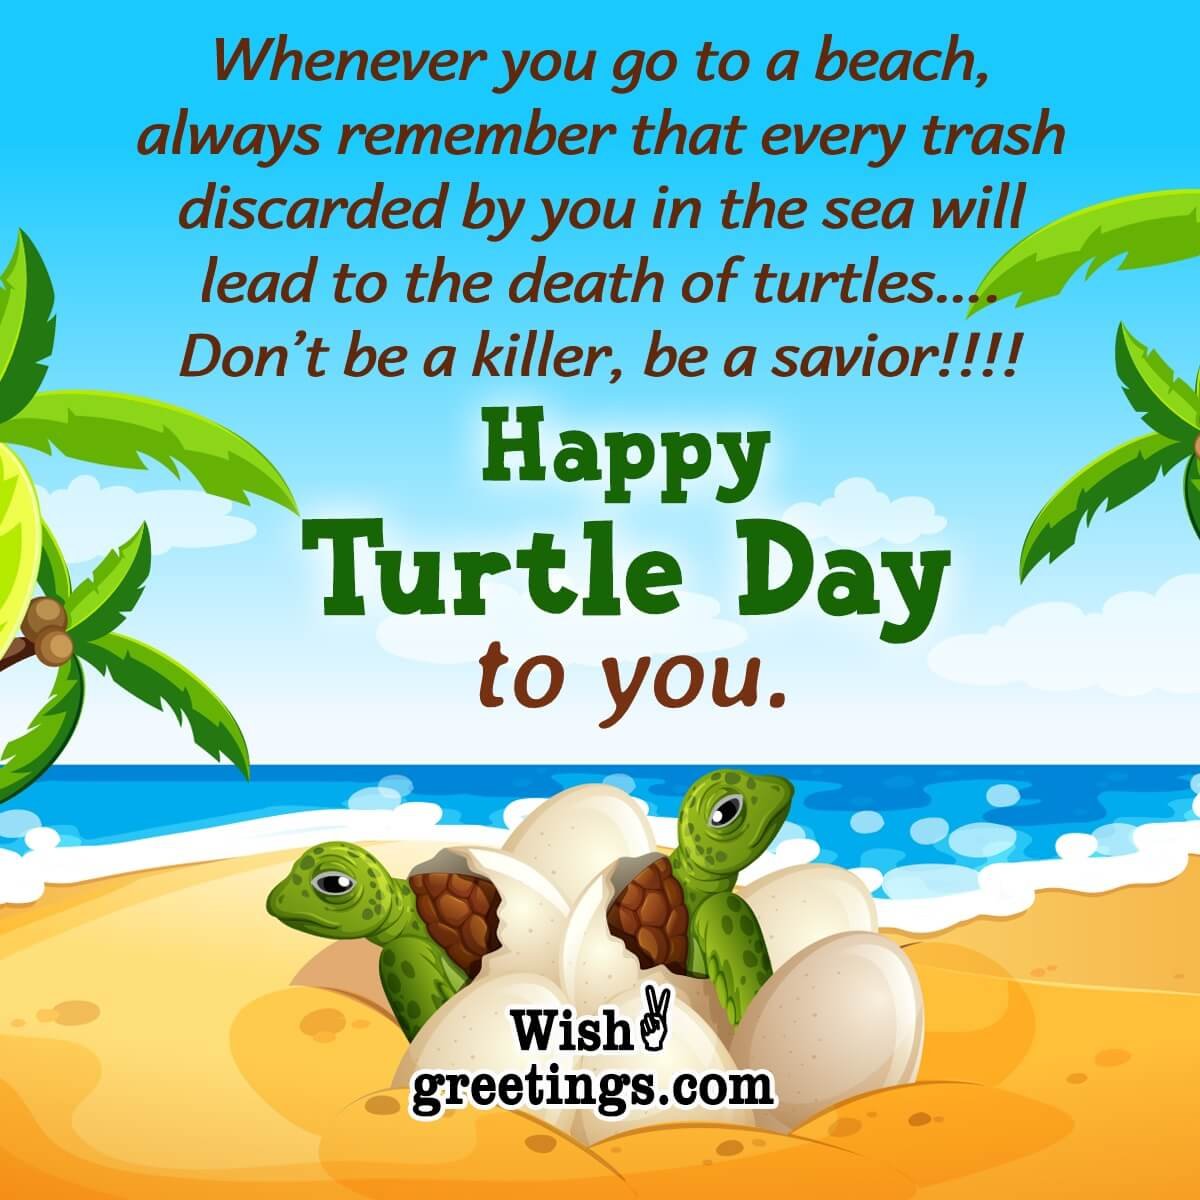 Happy Turtle Day Image